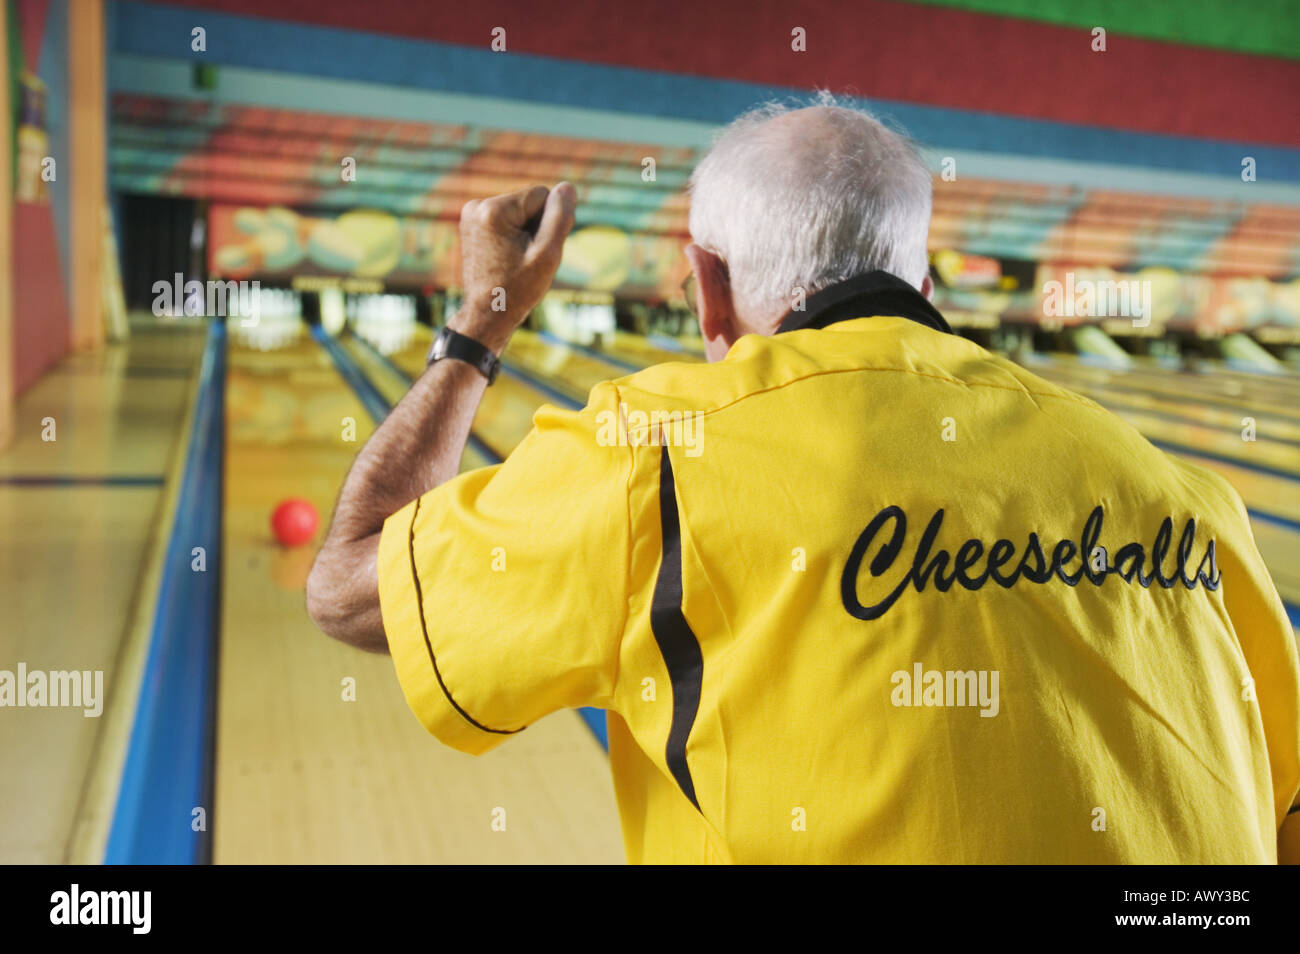 A senior man bowling Stock Photo